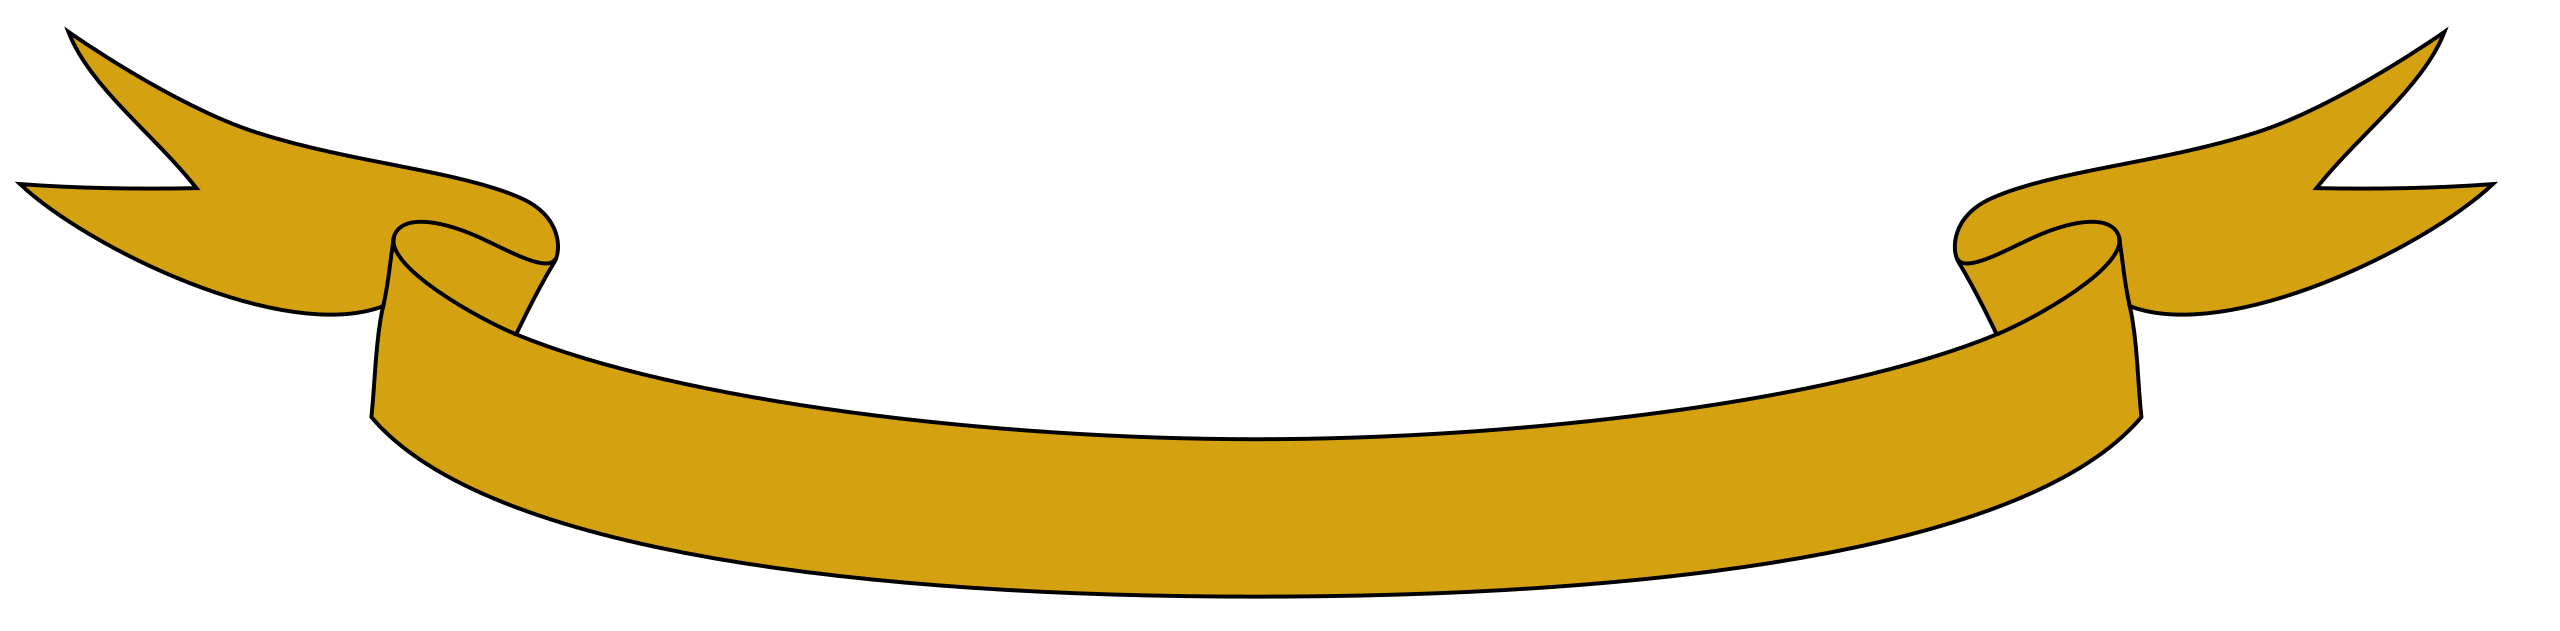 File:Italian Army heraldry motto.svg - Wikimedia Commons